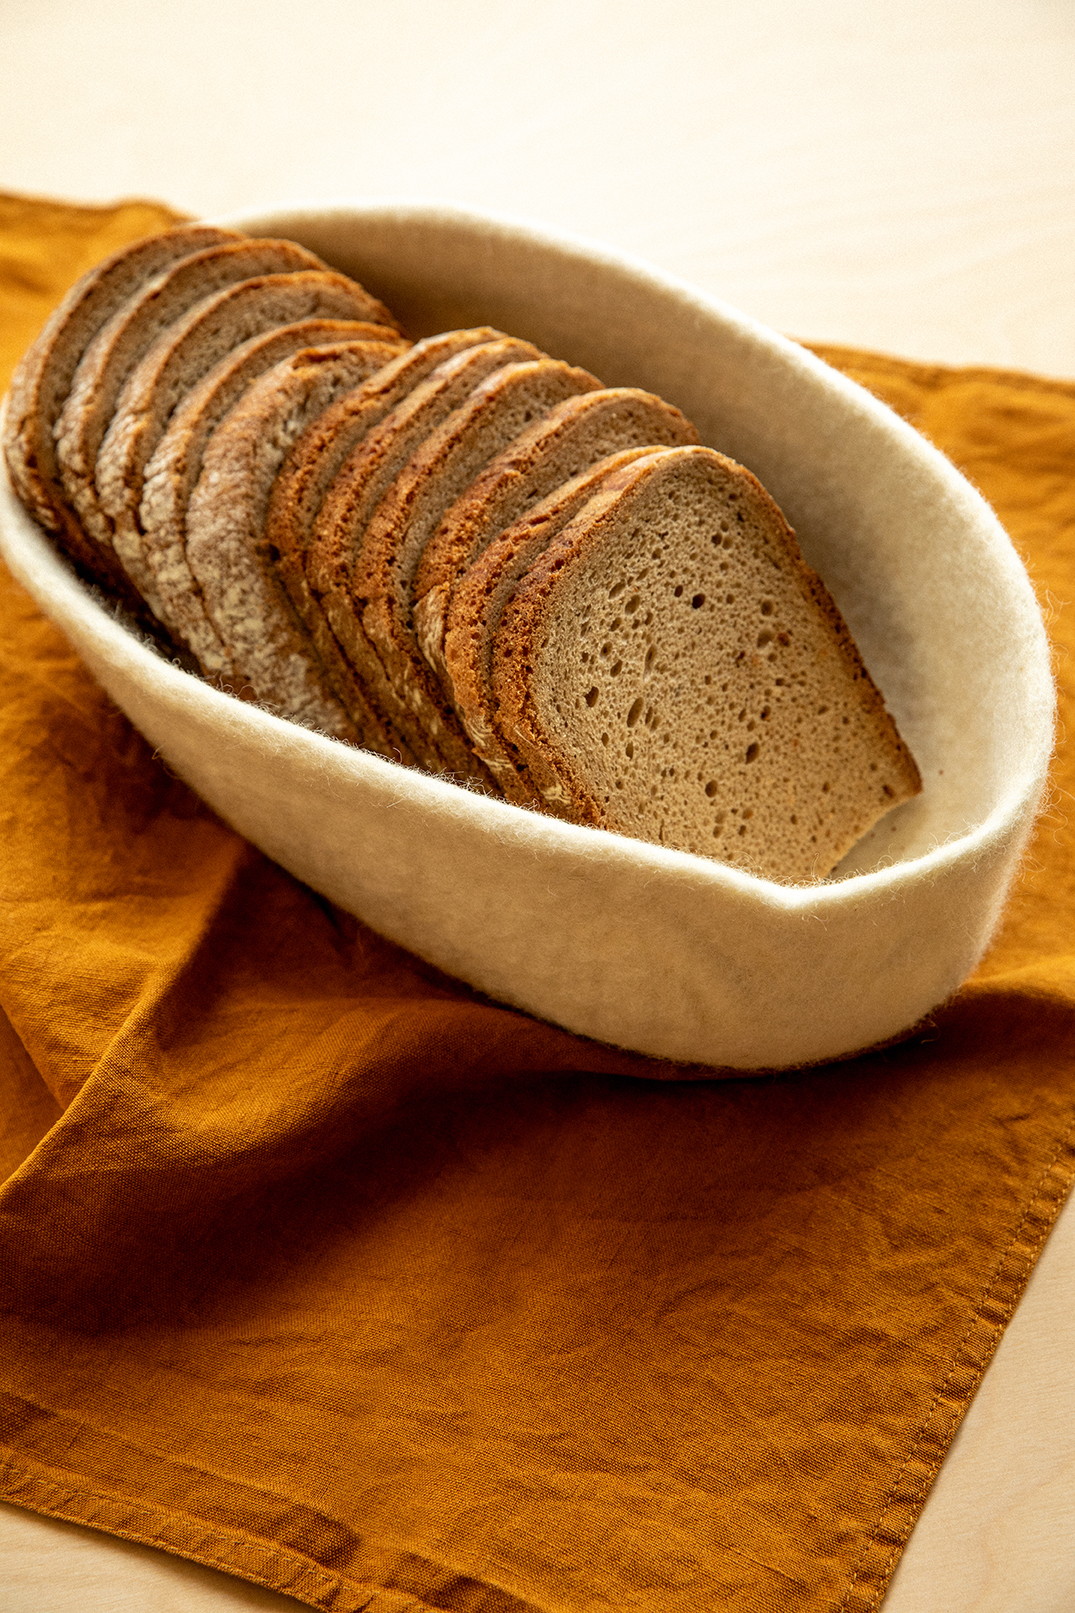 Slices of bread in an oval white wool felt basket